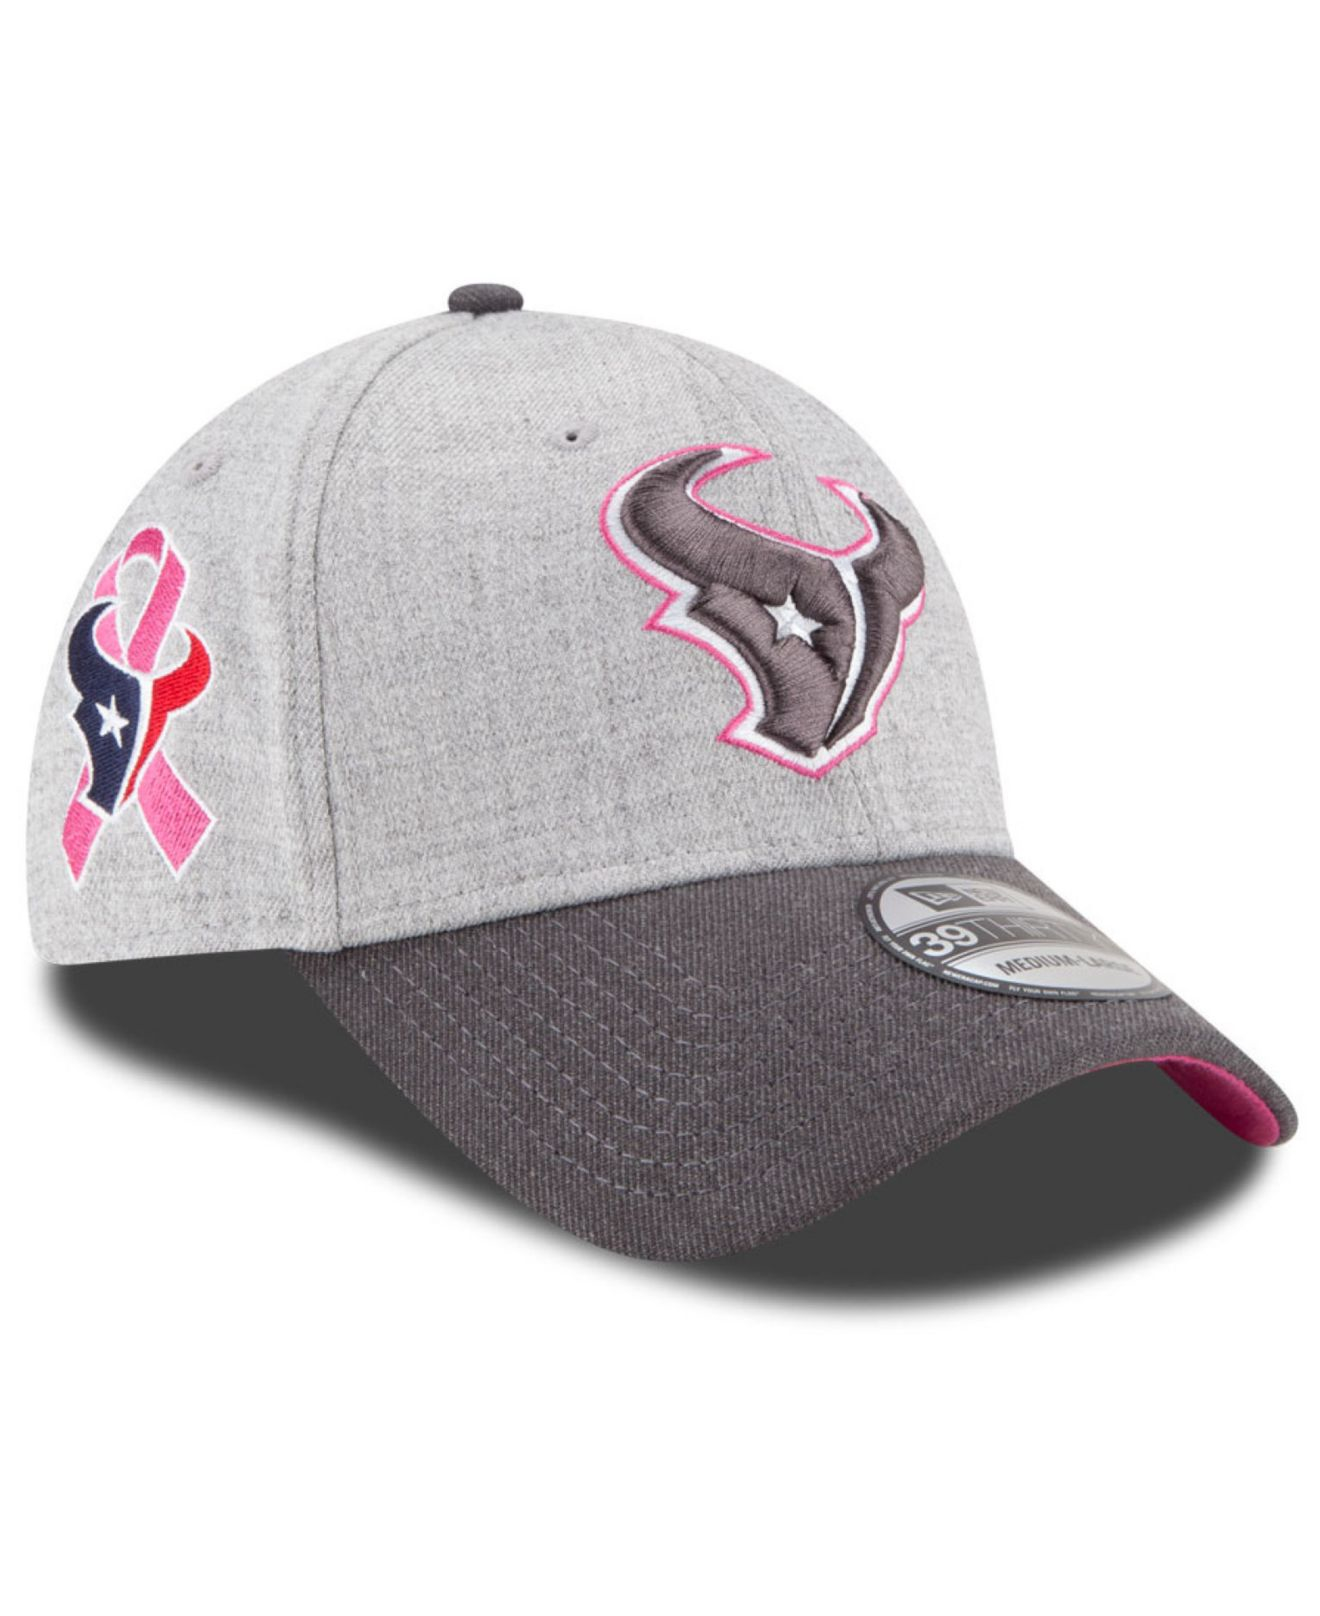 pink texans hat